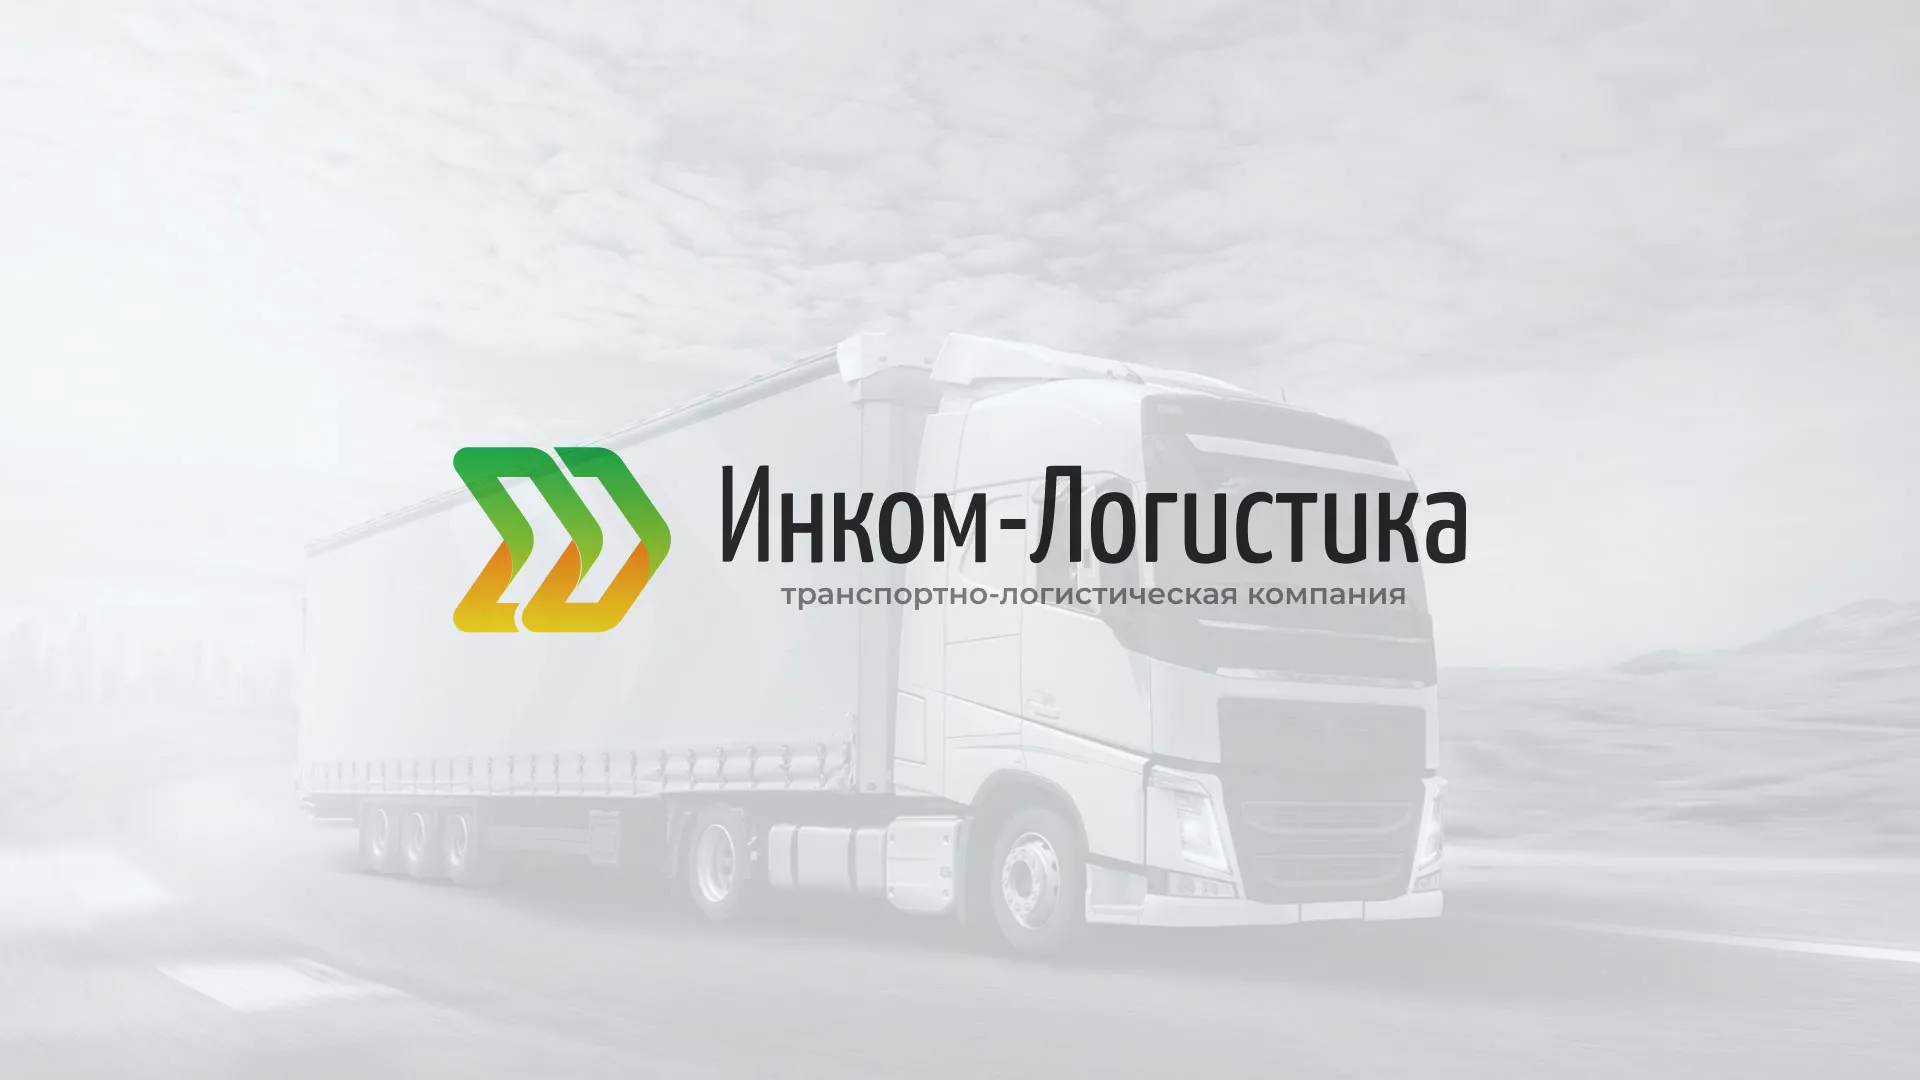 Разработка логотипа и сайта компании «Инком-Логистика» в Новосибирске